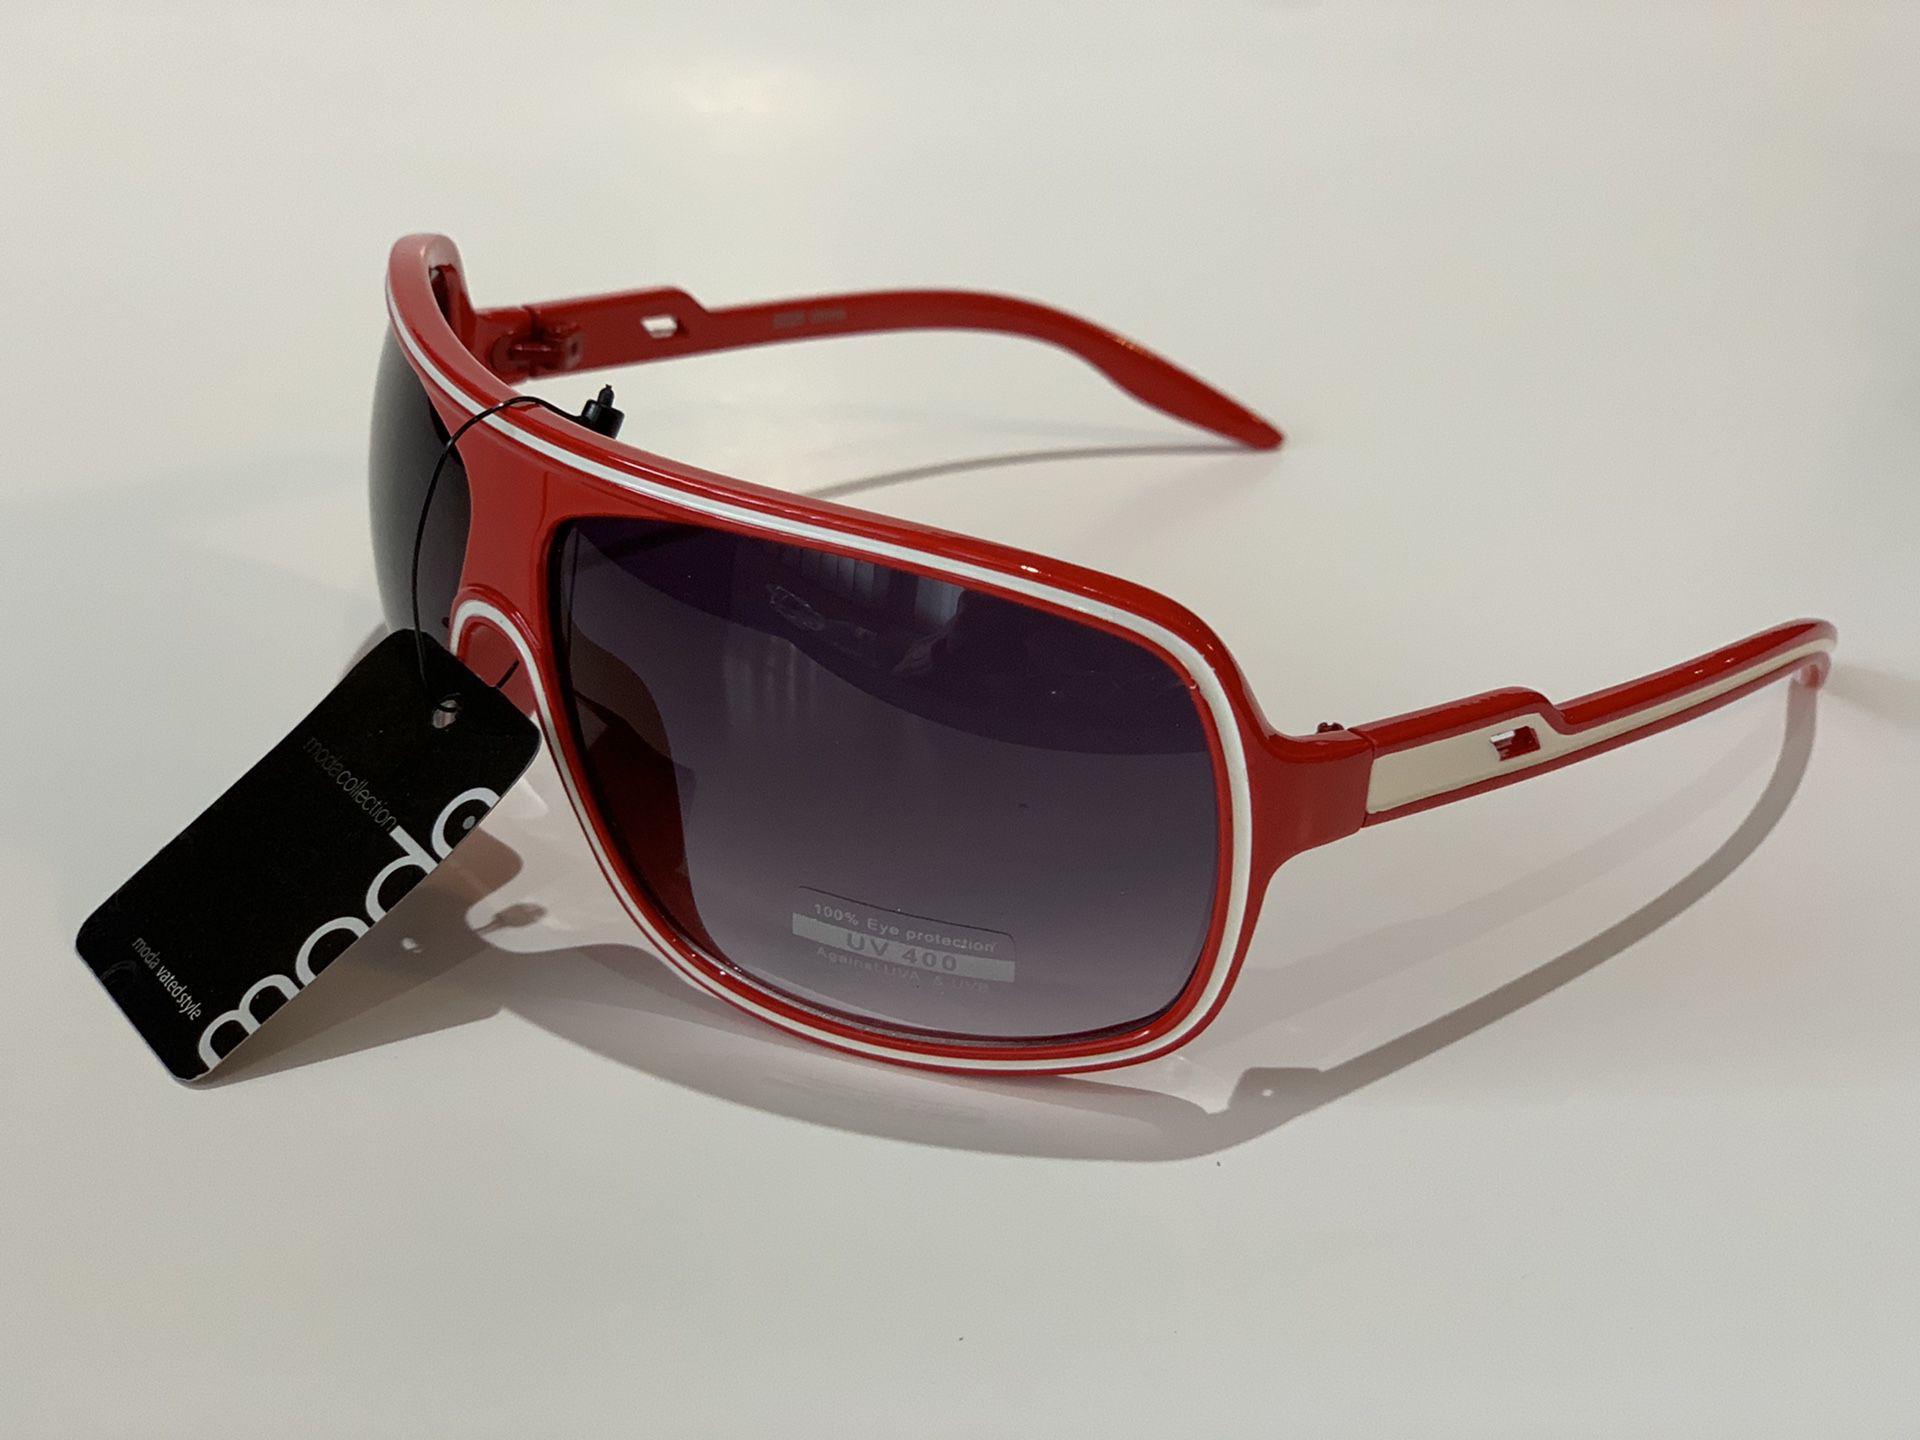 Sunglasses - Shades - Eyewear - Glasses - Accessories - Designer - Summer